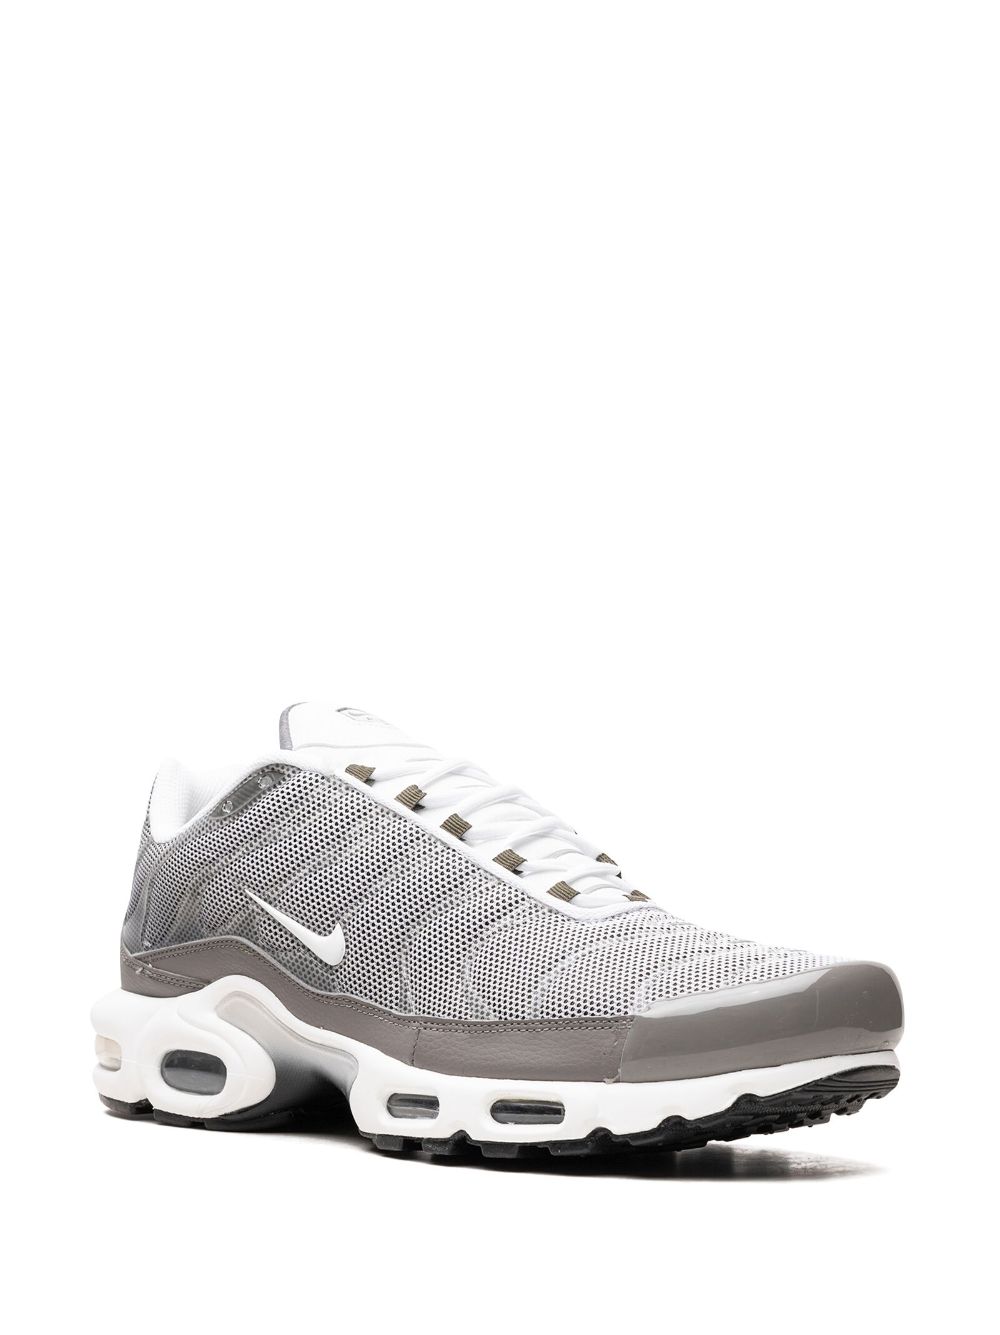 Image 2 of Nike "Air Max Plus SE ""Flat Pewter"" sneakers"